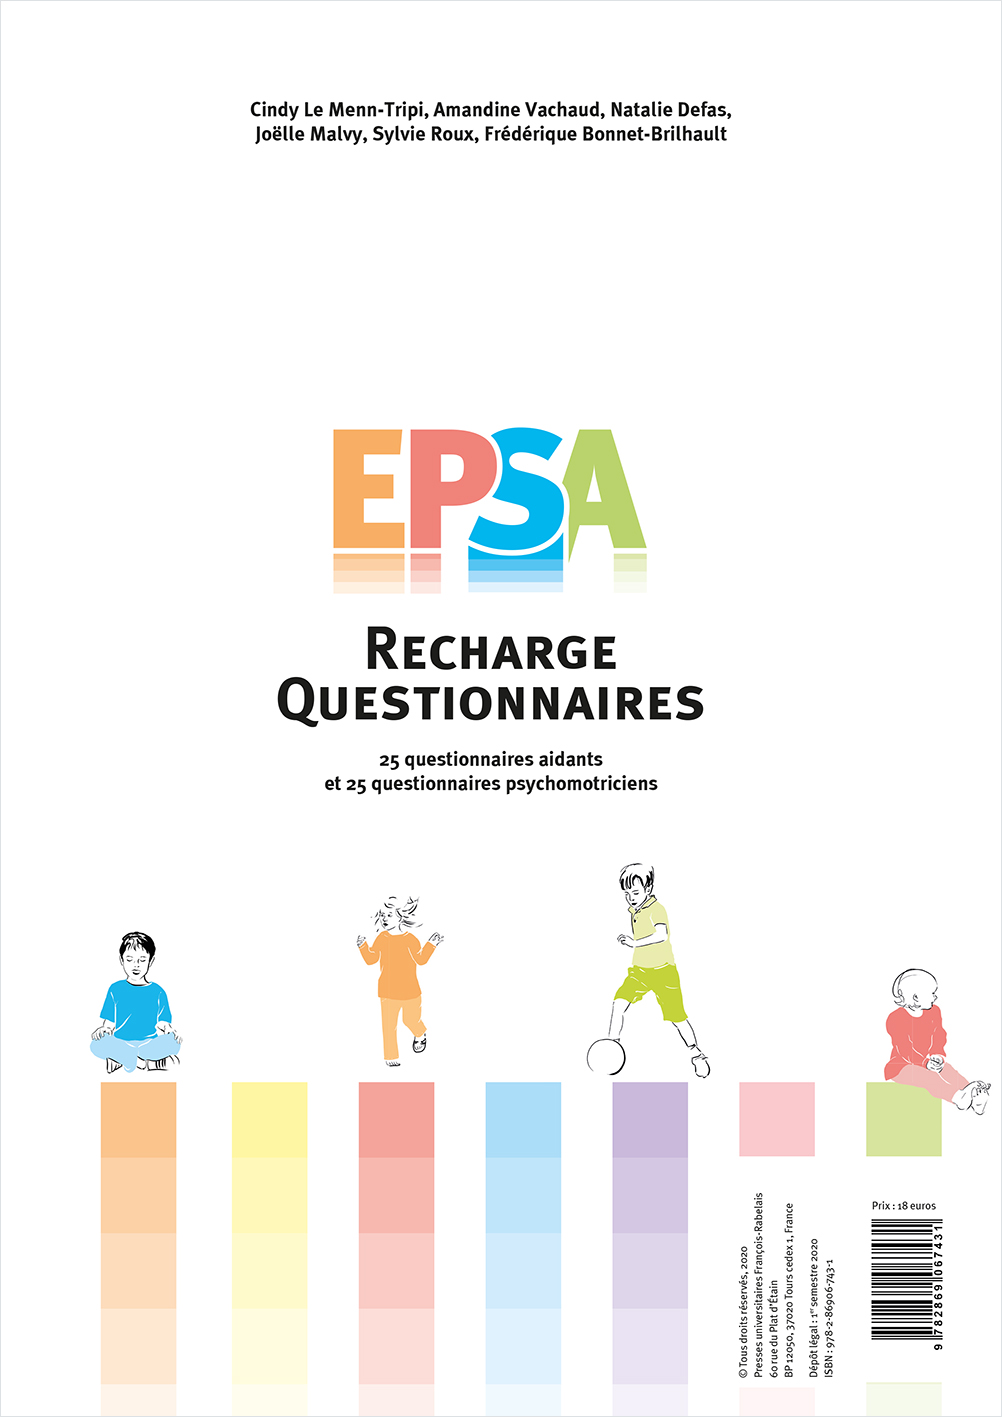 EPSA – Recharges